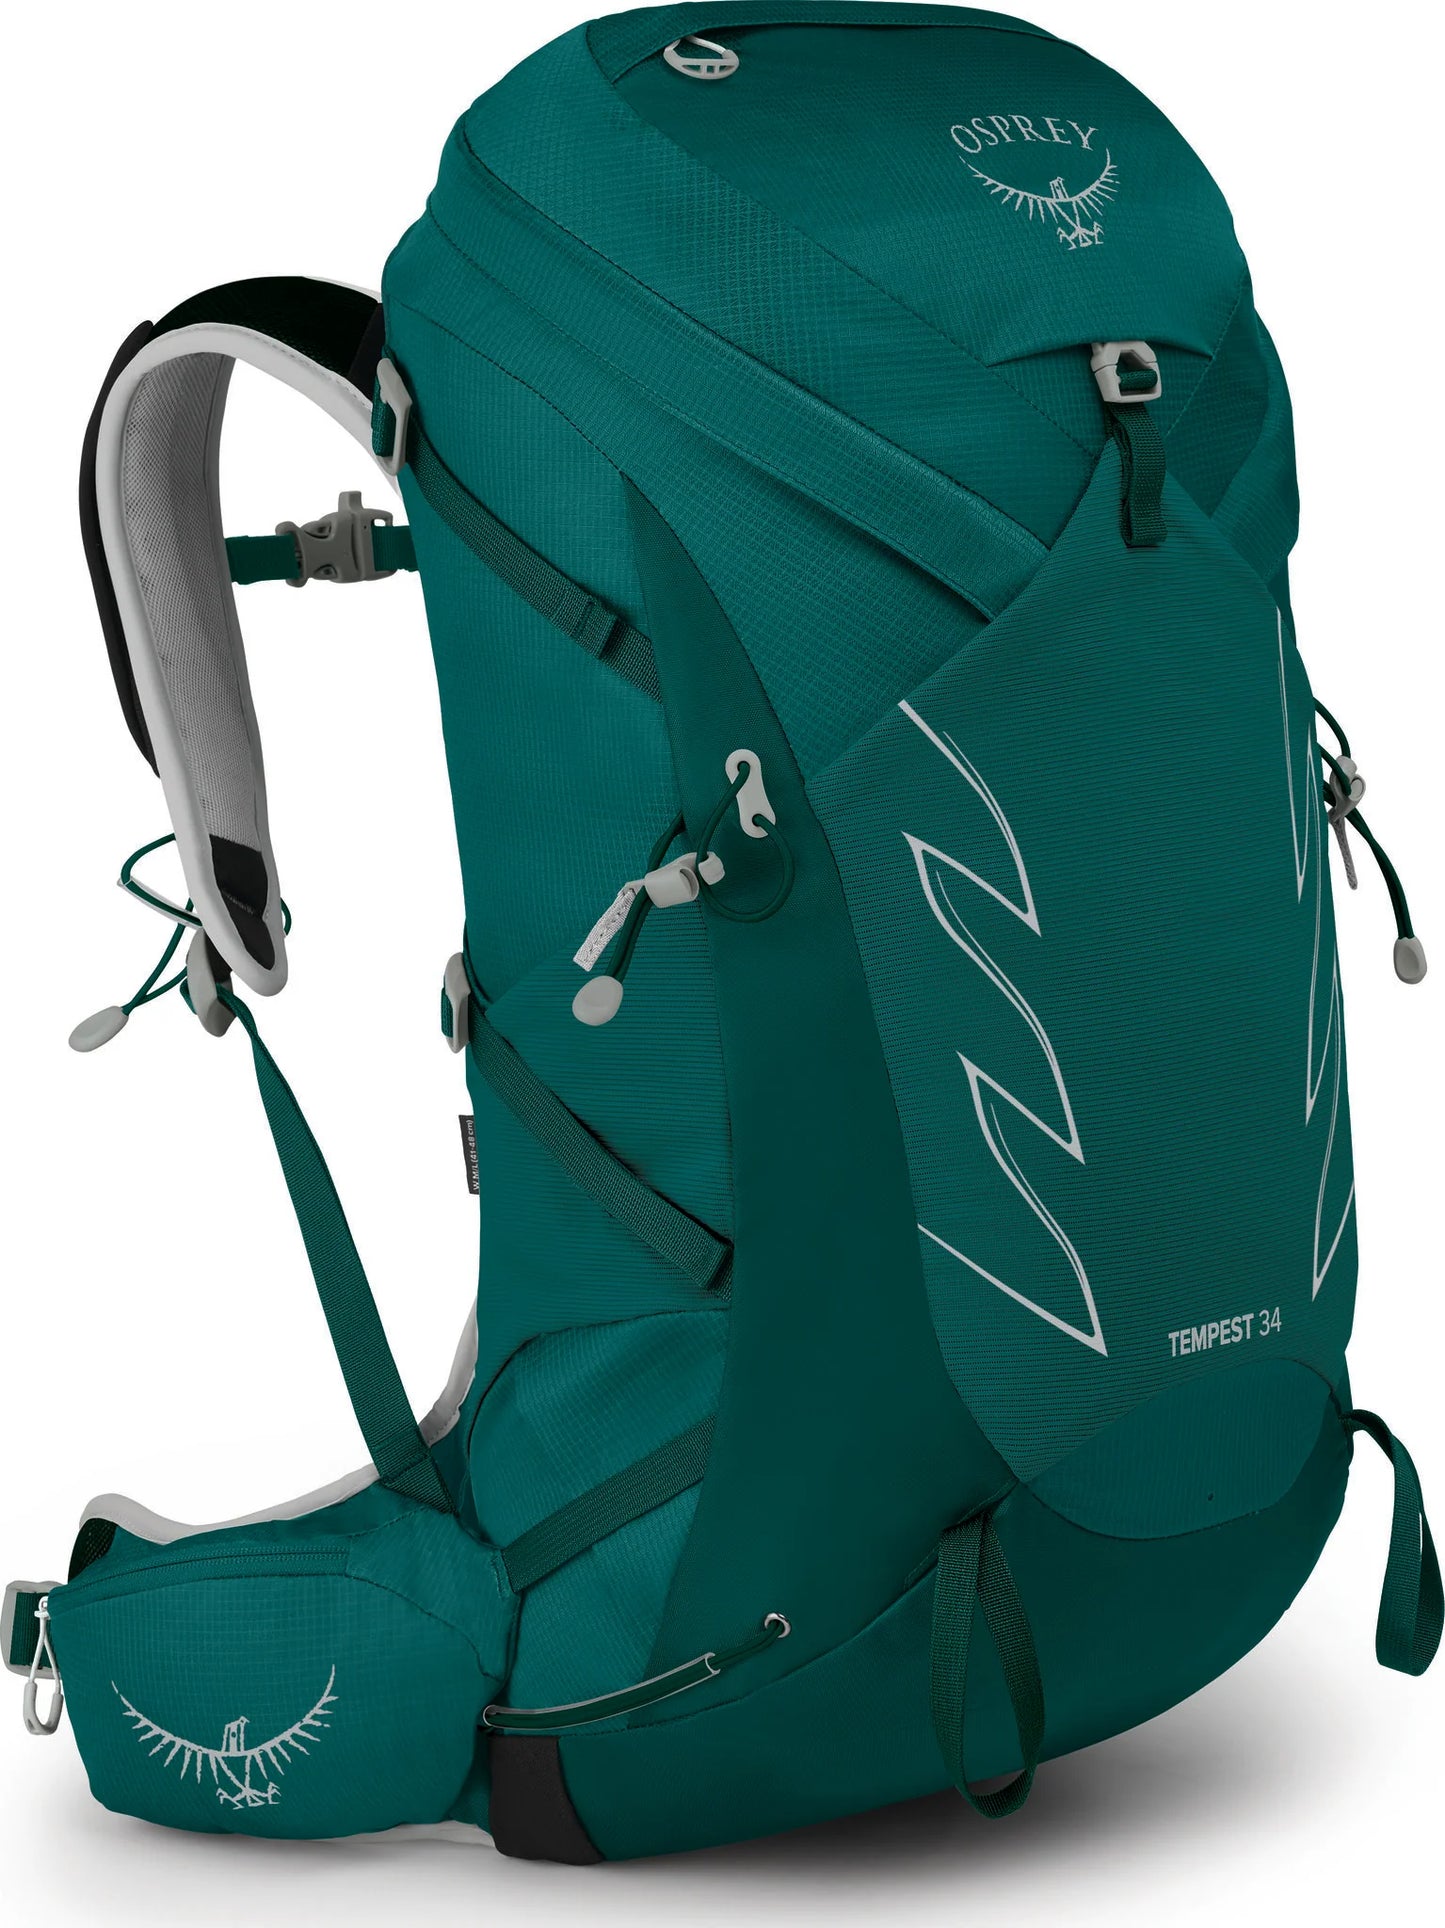 Osprey - Tempest 34L Hiking Backpack - Women's